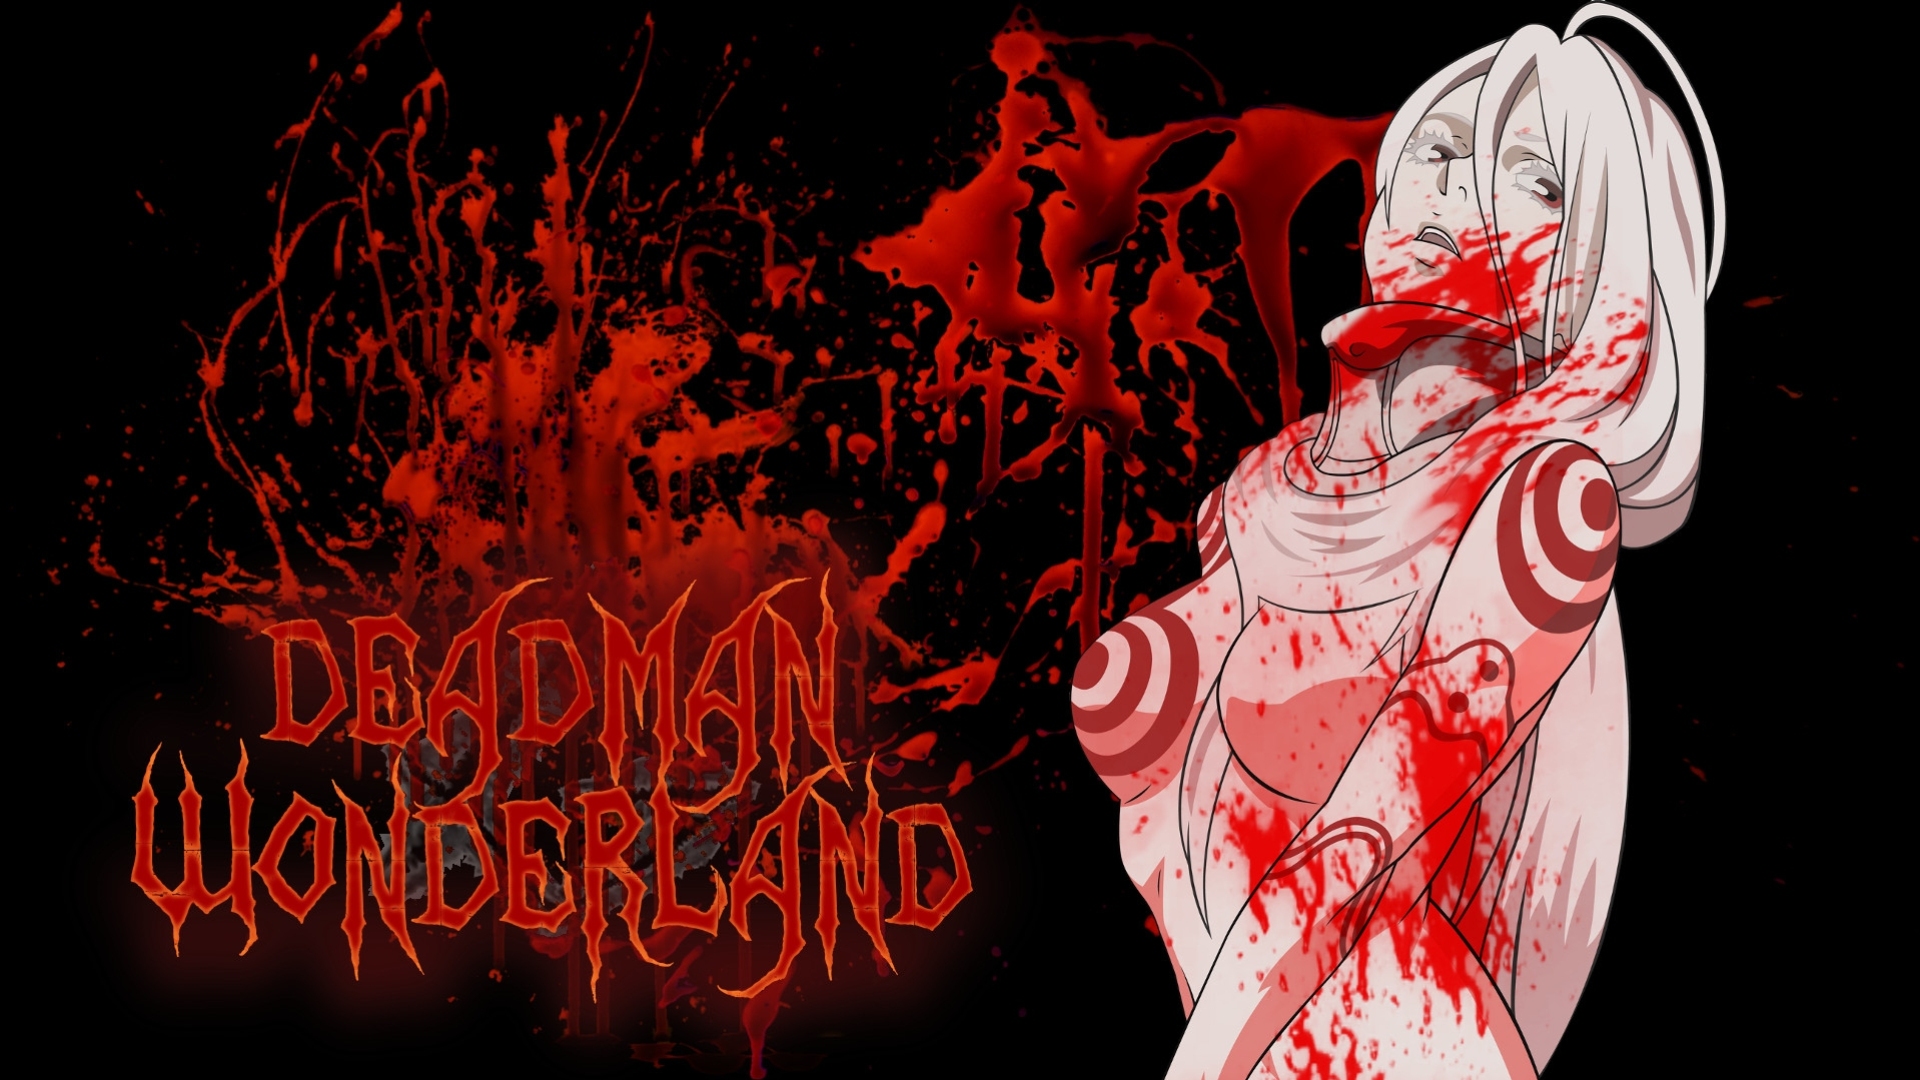 Shiro Deadman Wonderland Wallpaper - WallpaperSafari